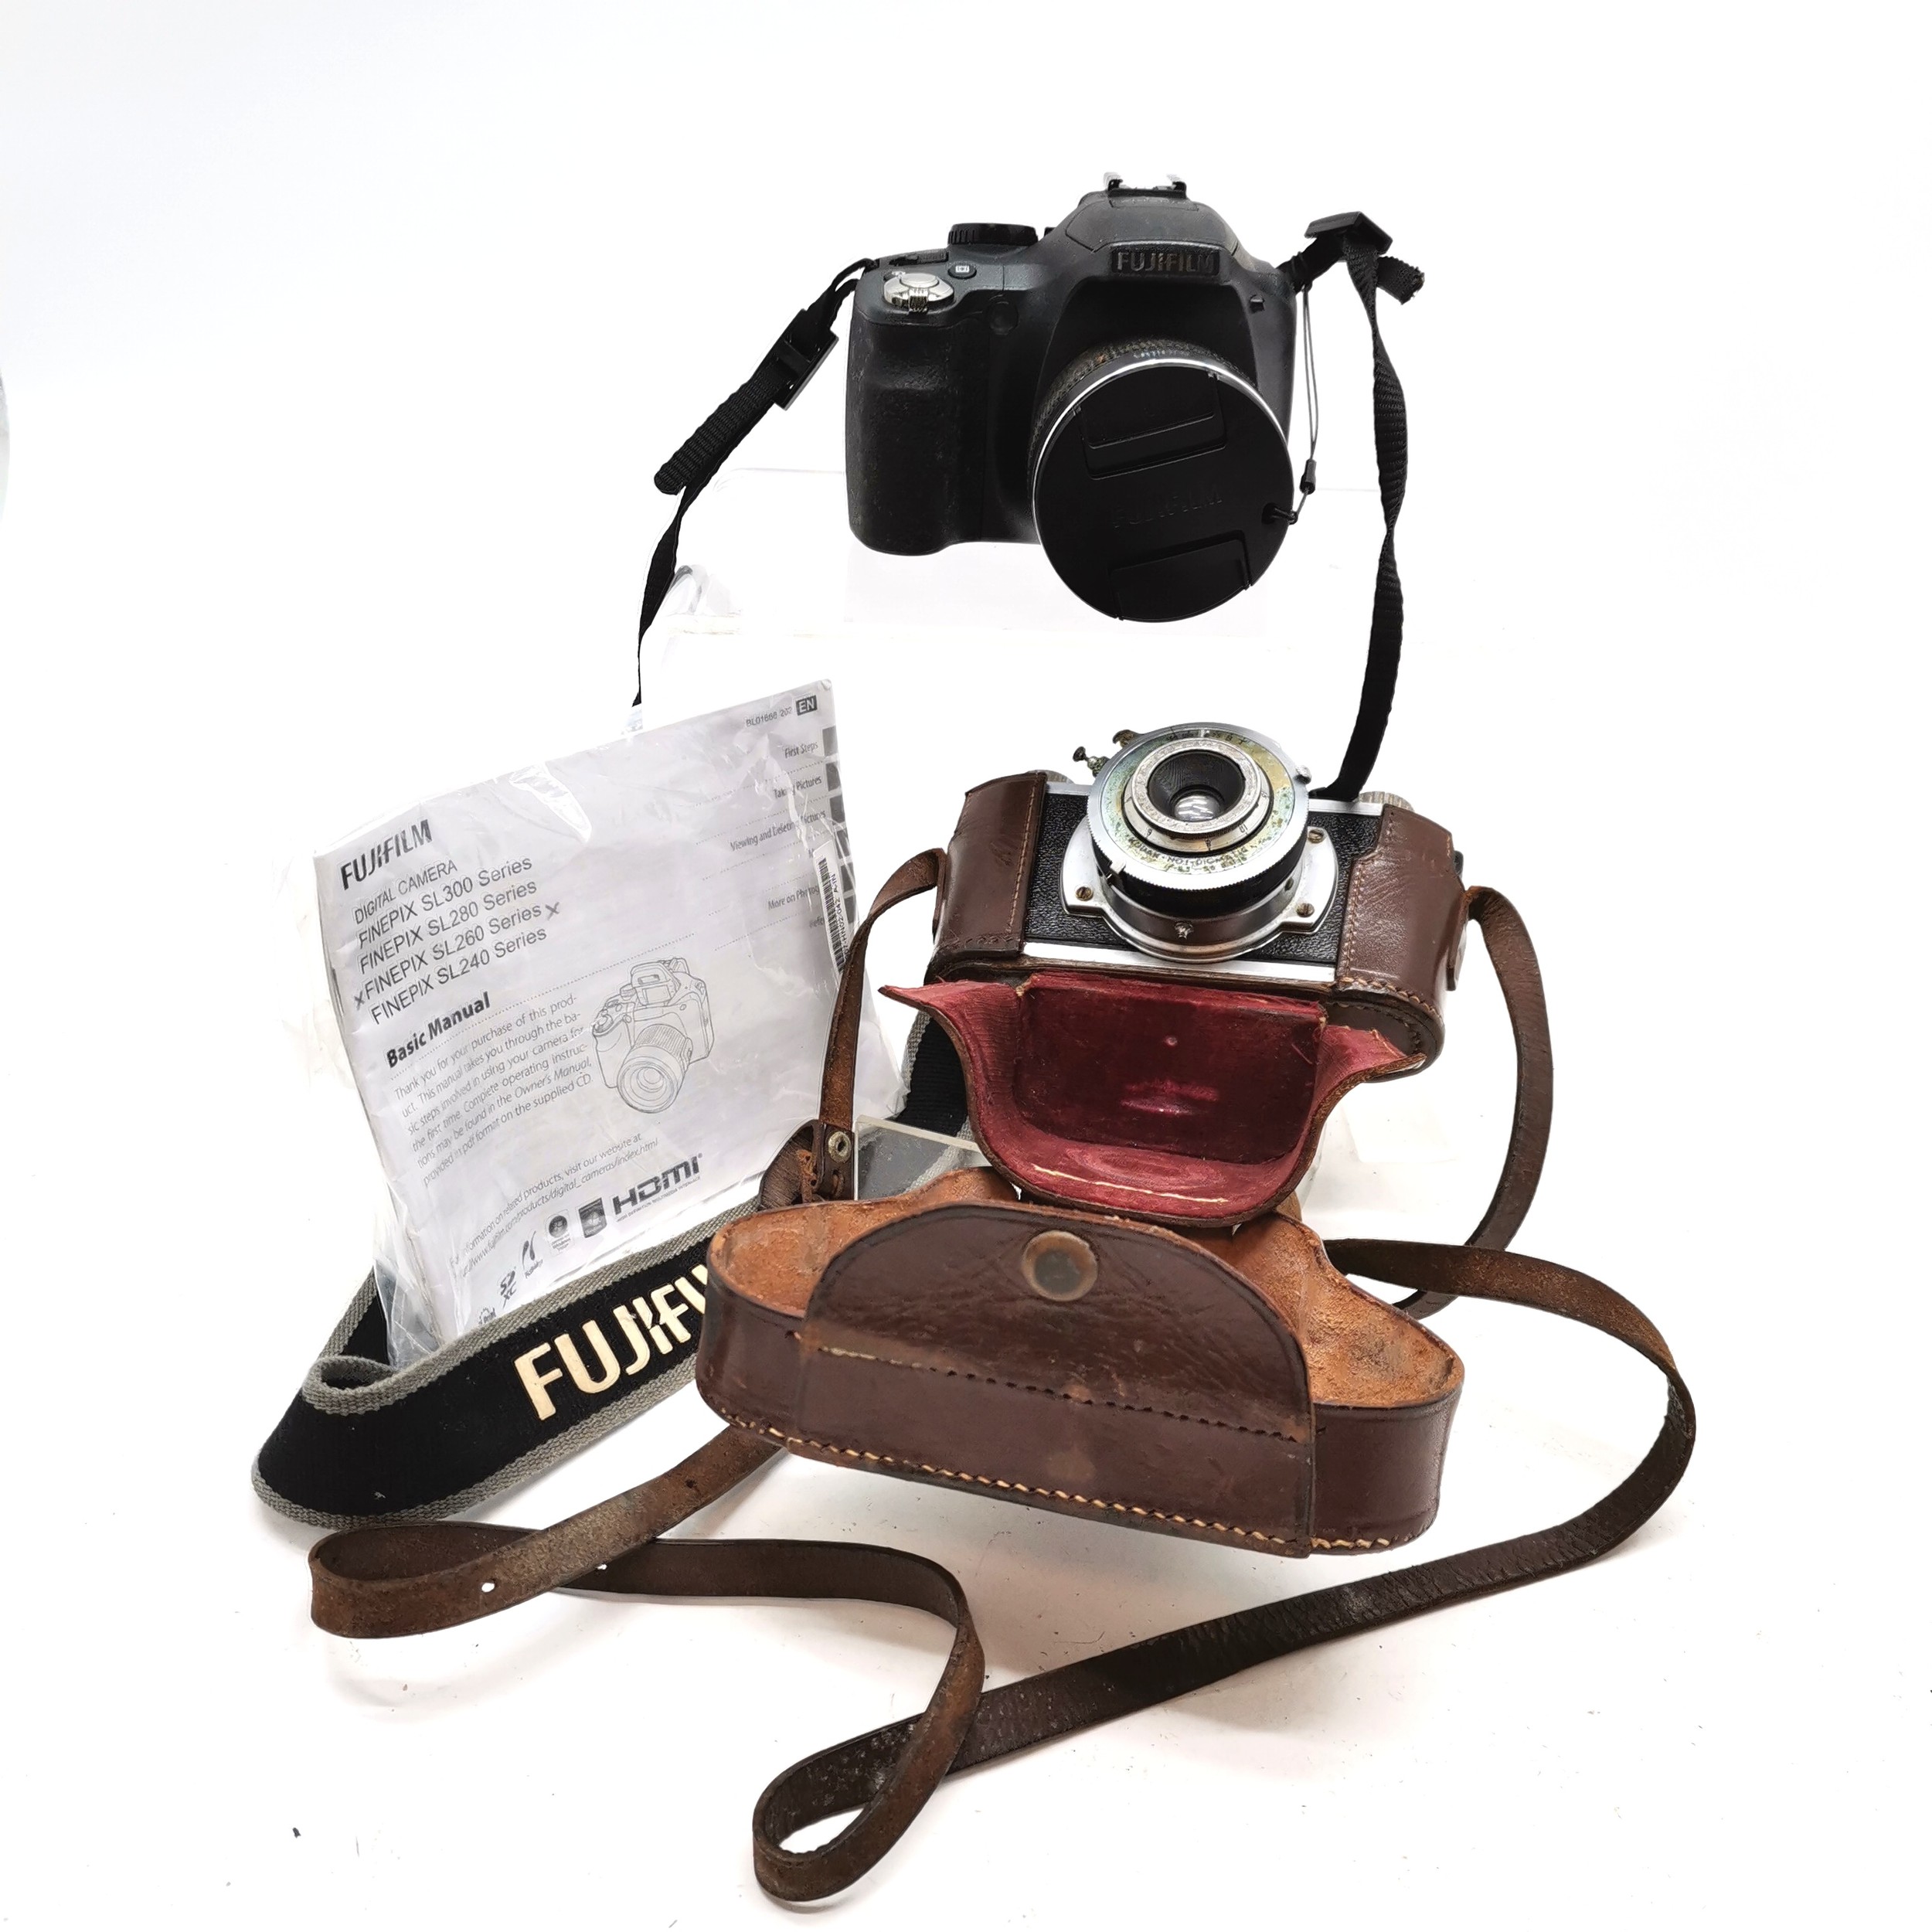 Minolta Mini 35 slide projector in original box and carry case, Fujifilm camera and case, Sony video - Image 3 of 3